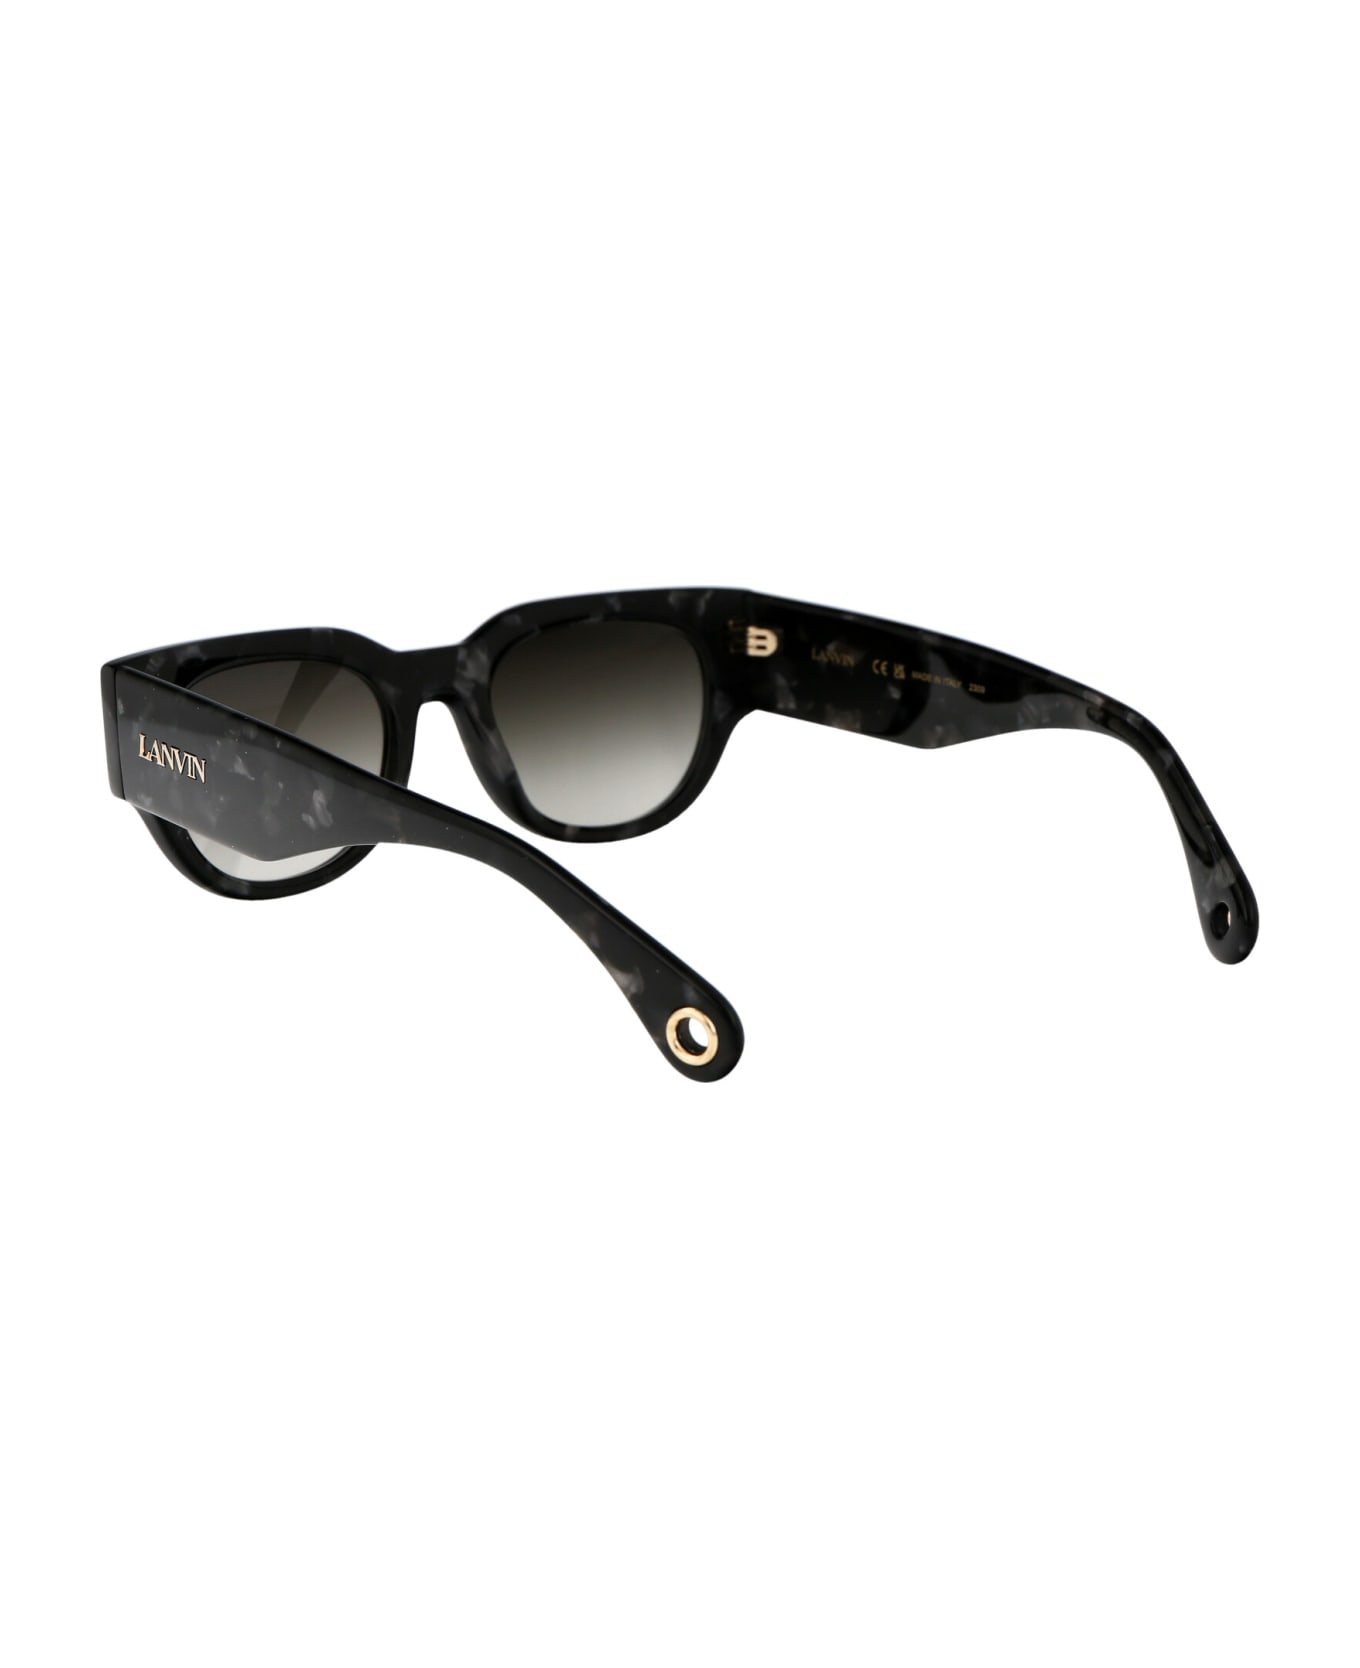 Lanvin Lnv670s Sunglasses - 009 GREY TORTOISE サングラス